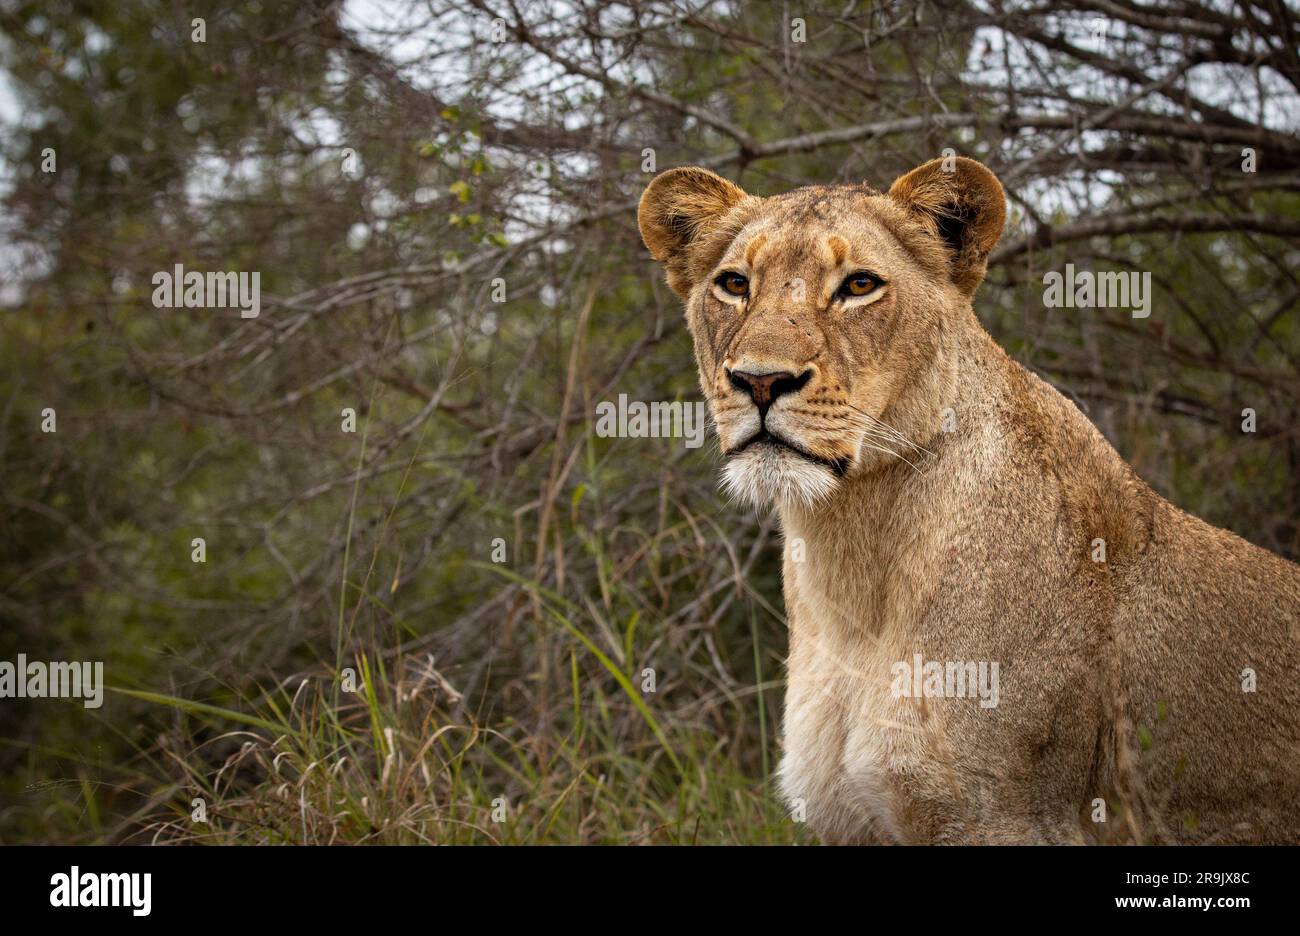 A close-up portrait of a  lioness, Panthera leo. Stock Photo